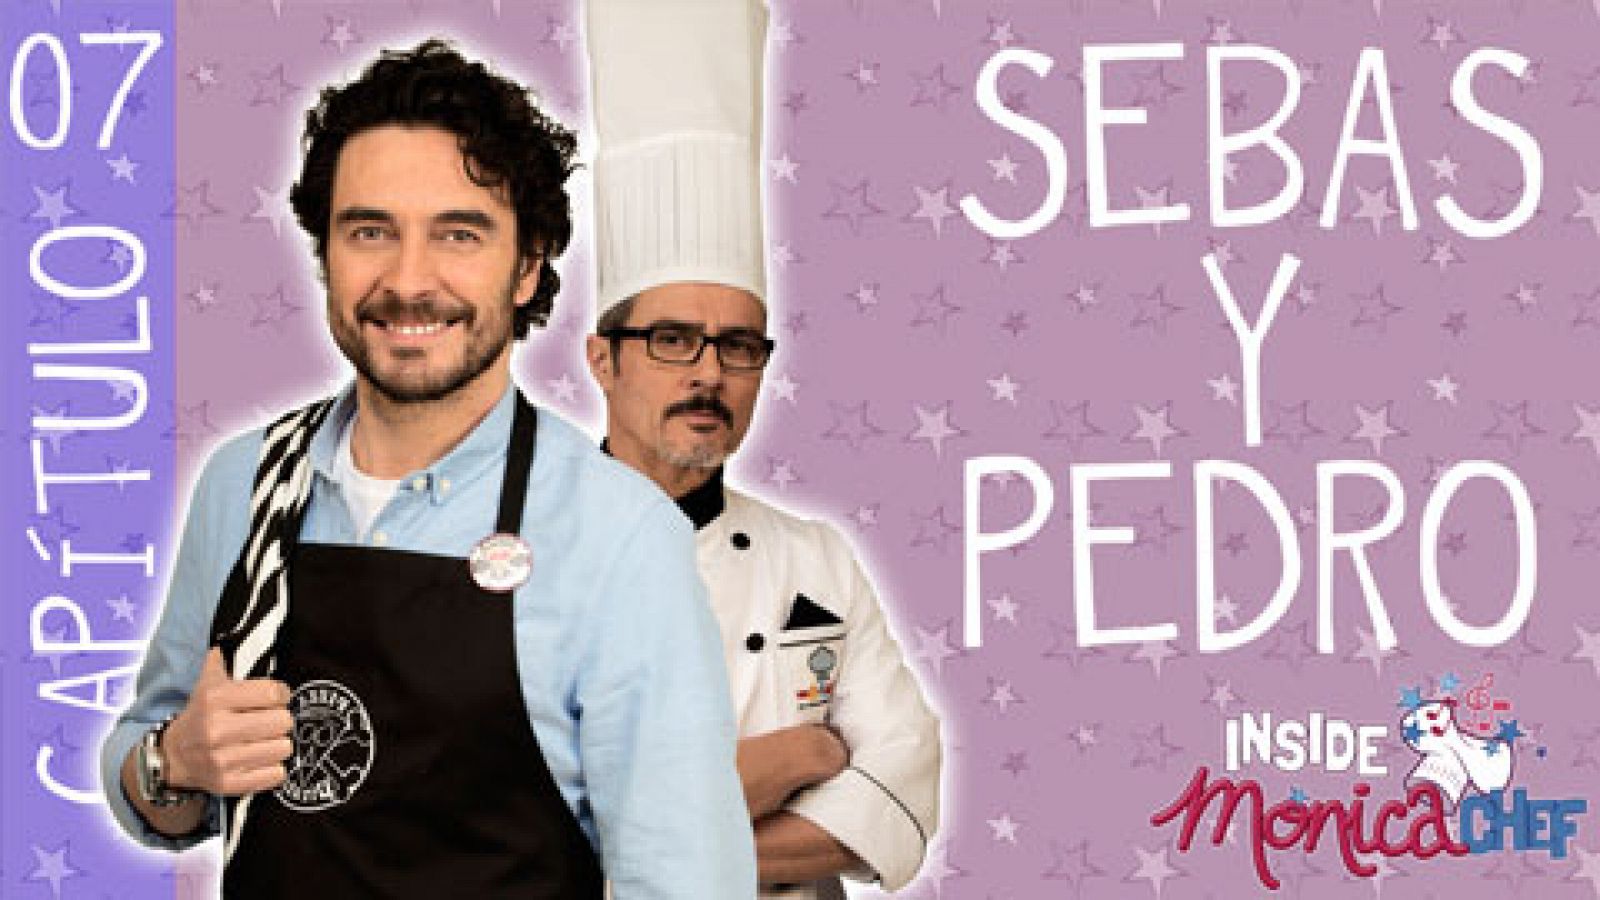 Sin programa: Inside Mónica Chef 7 - Sebas y Pedro | RTVE Play